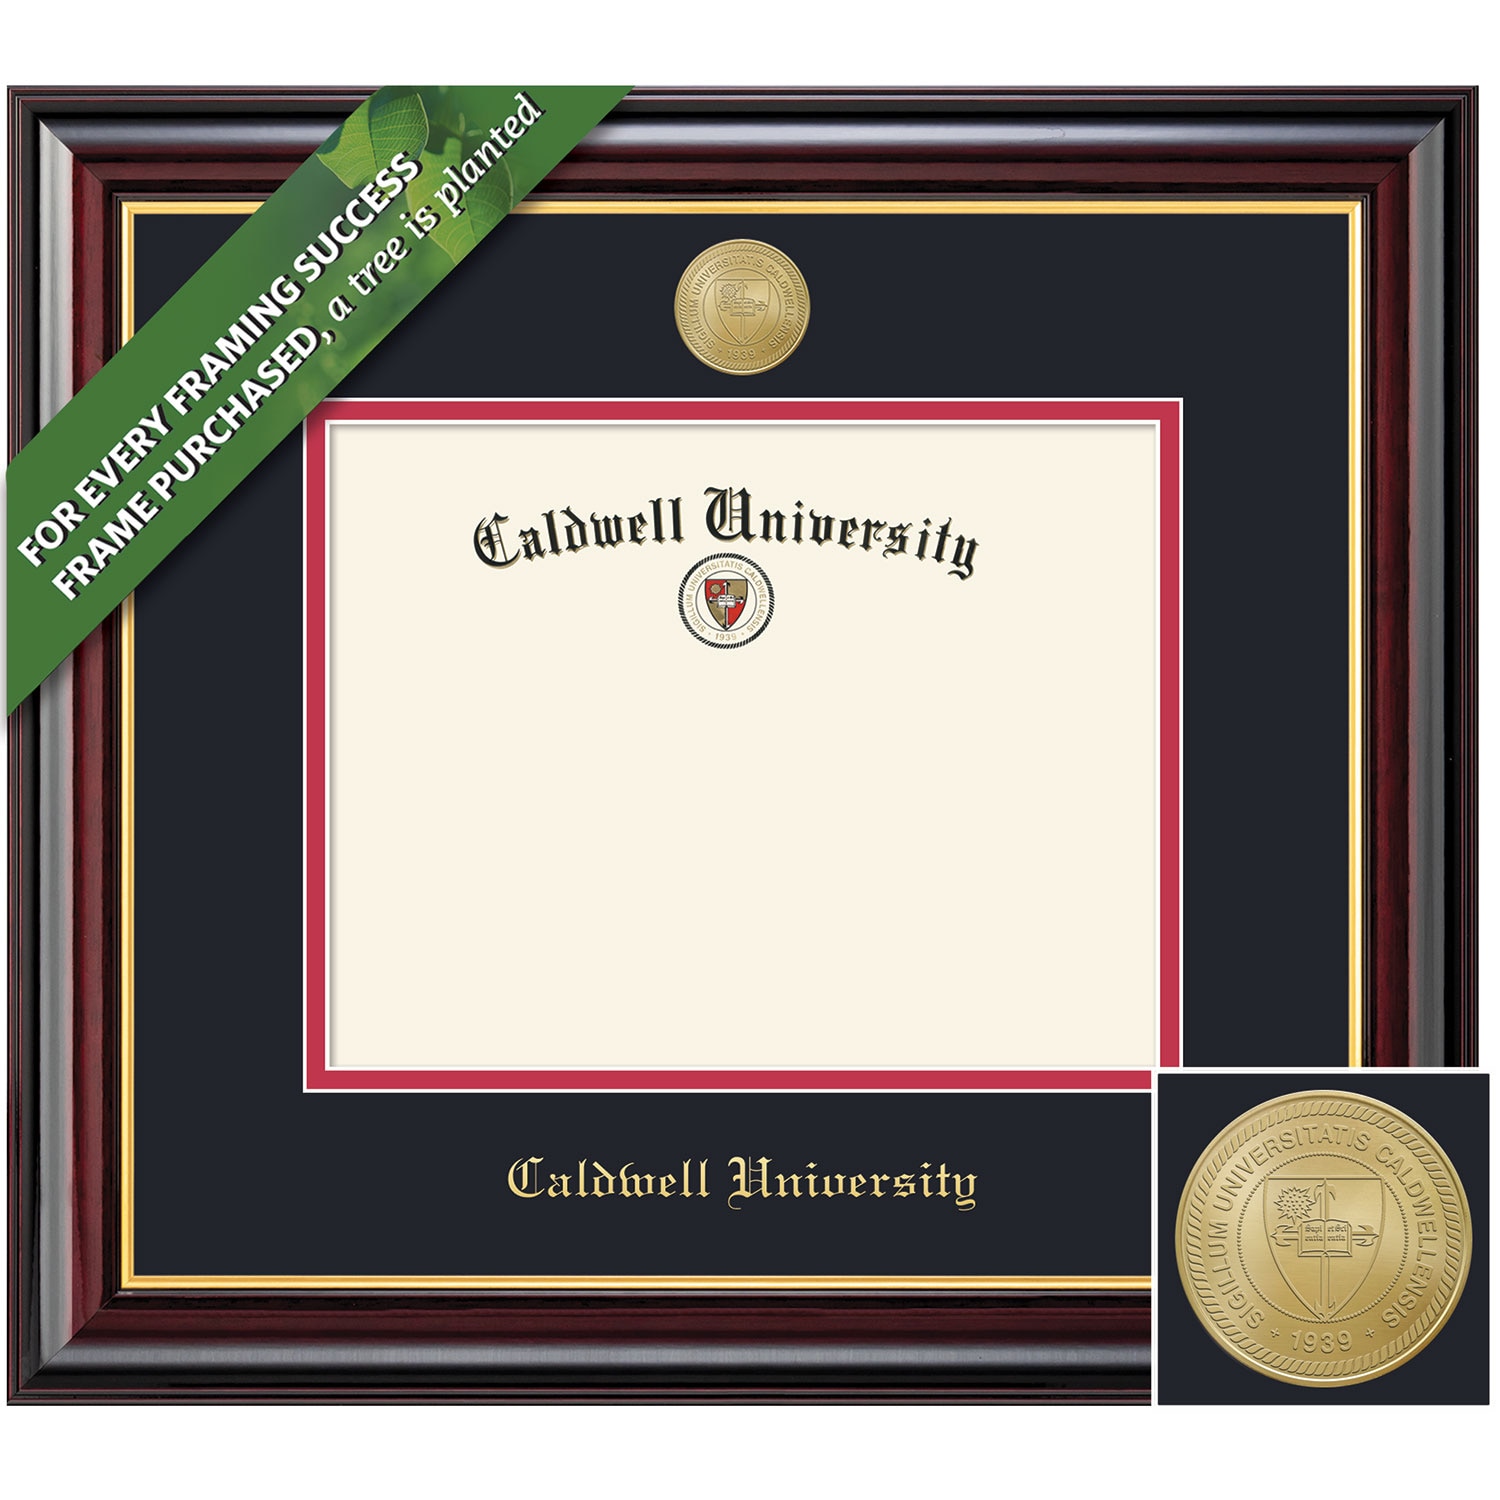 Framing Success 8 x 10 Windsor Gold Medallion Bachelors Diploma Frame